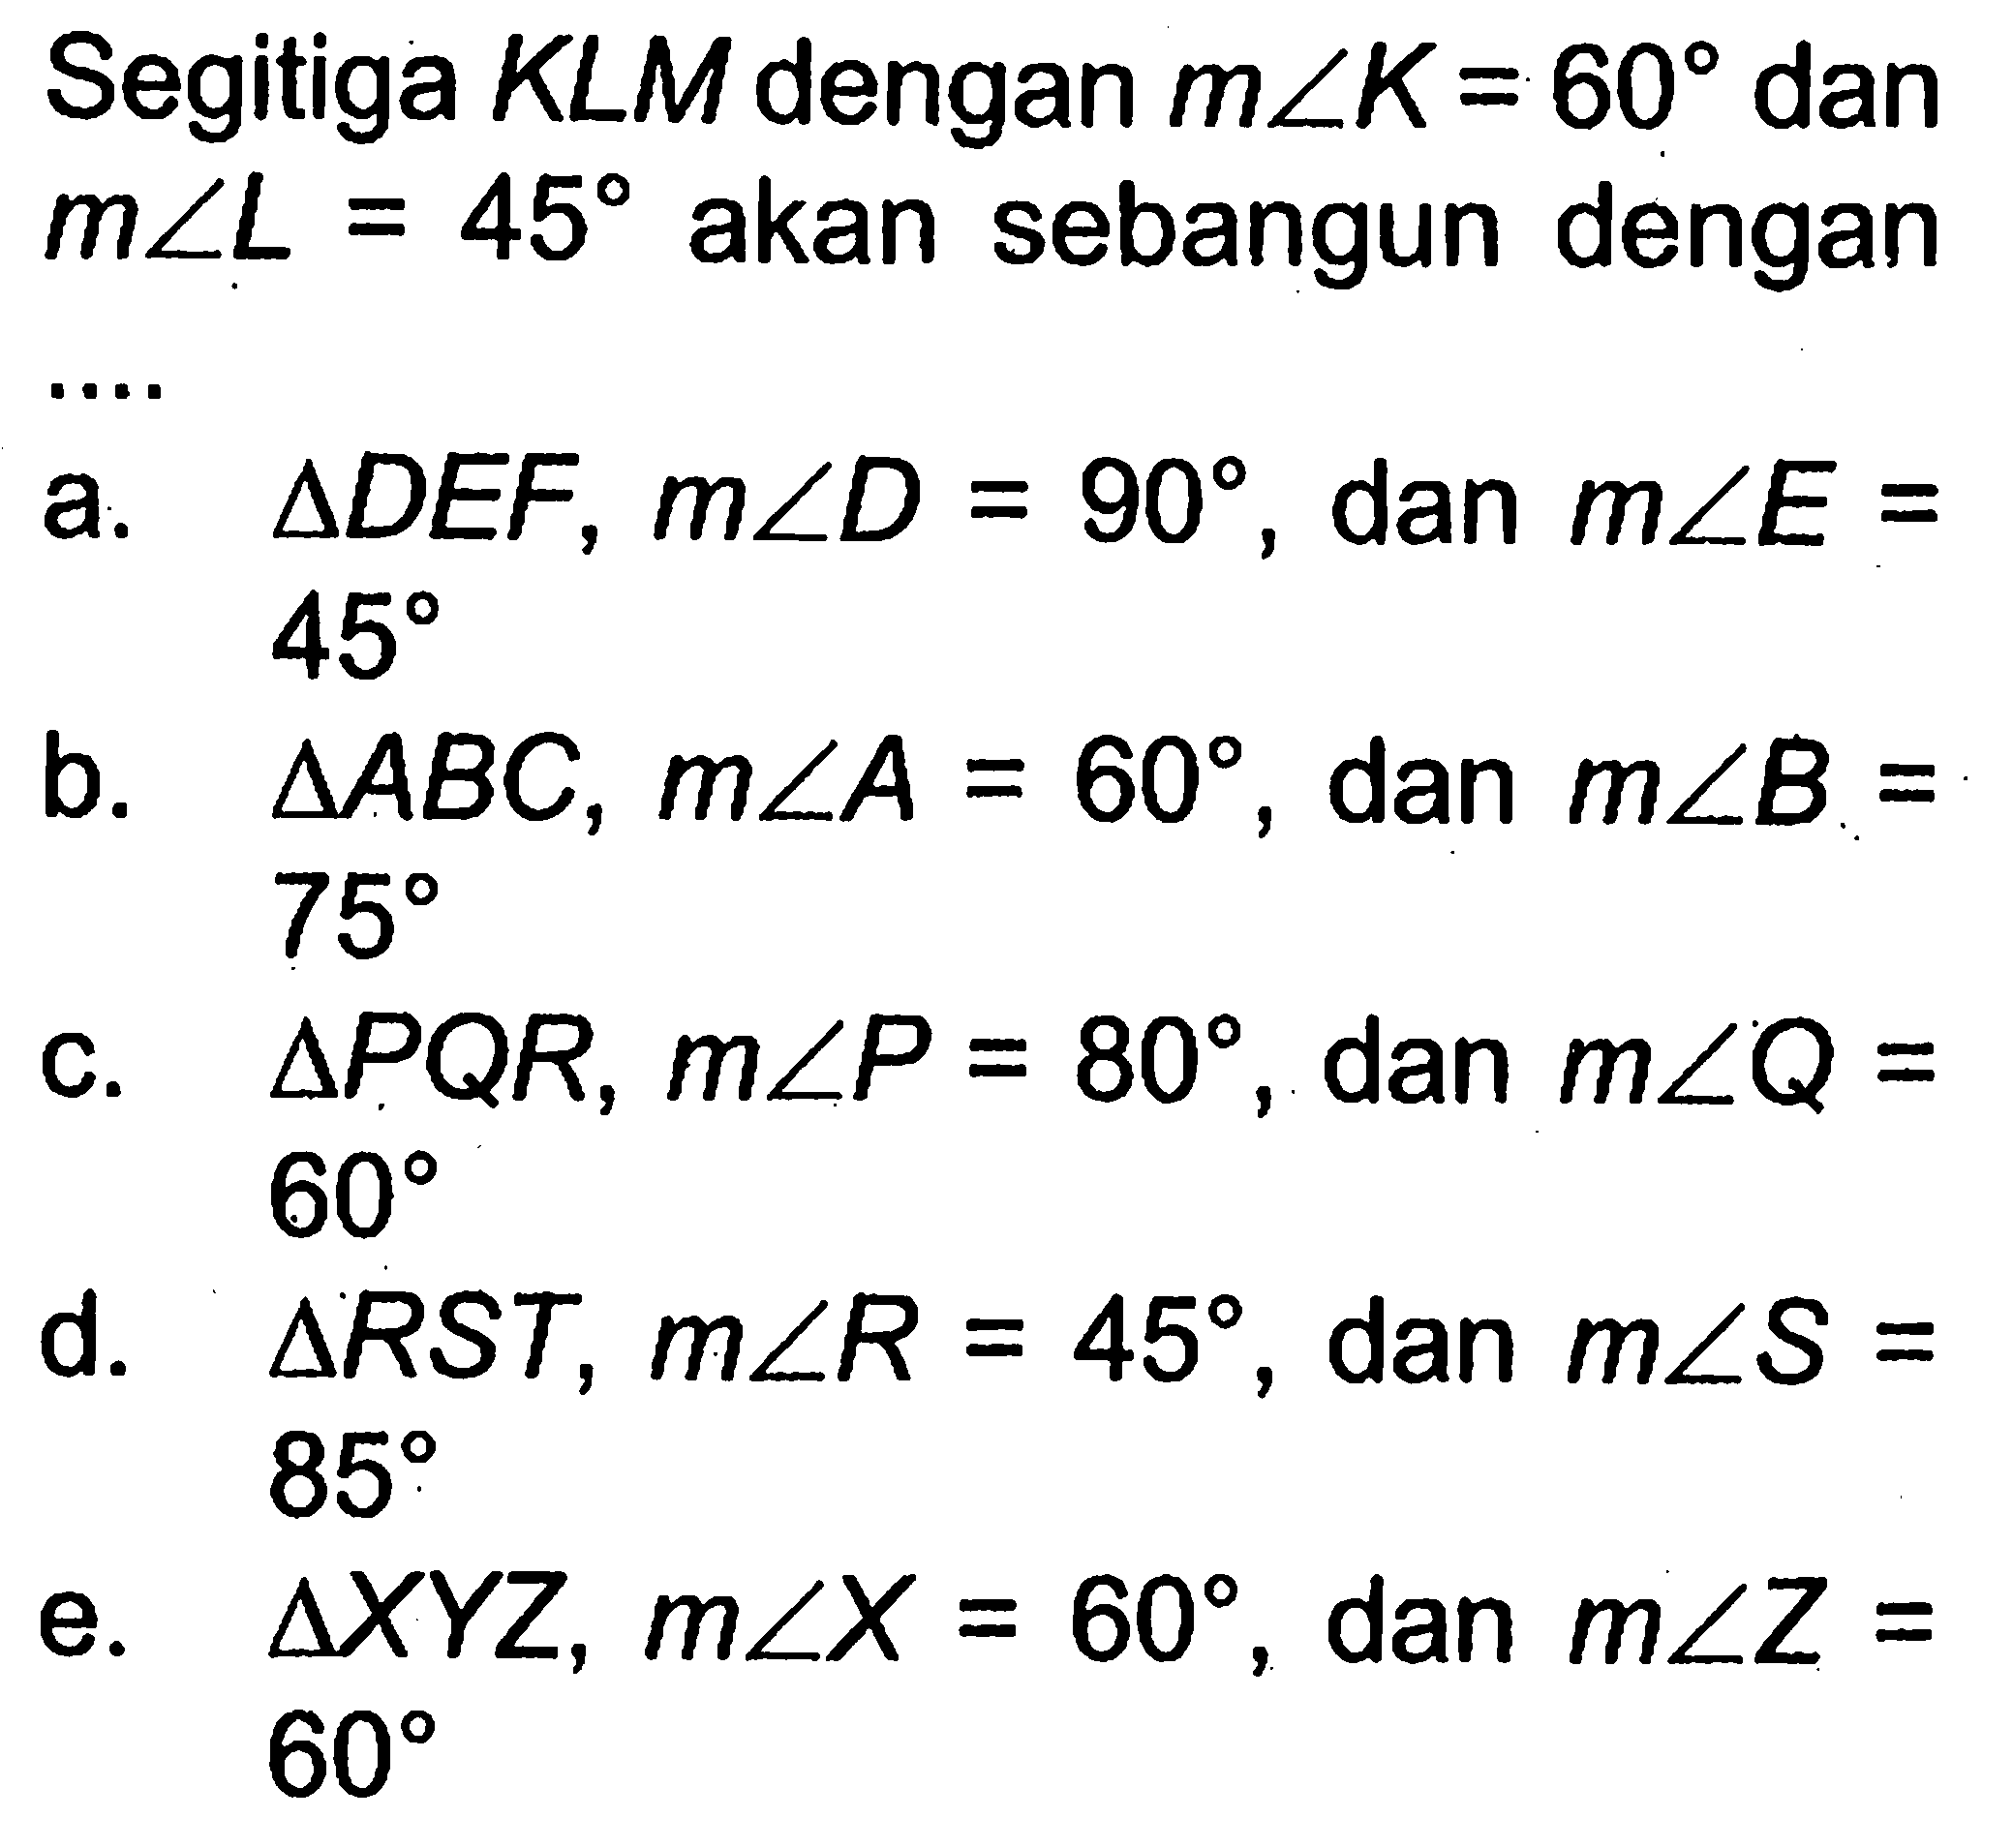 Segitiga KLM dengan m sudut K=60 dan m sudut L=45 akan sebangun dengan...  a. segitiga DEF, m sudut D=90, dan m sudut E=45  b. segitiga ABC, m sudut A=60, dan m sudut B=75 c. segitiga PQR, m sudut P=80, dan m sudut Q=60 d. segitiga RST, m sudut R=45, dan m sudut S=85 e. segitiga XYZ, m sudut X=60, dan m sudut Z=60 